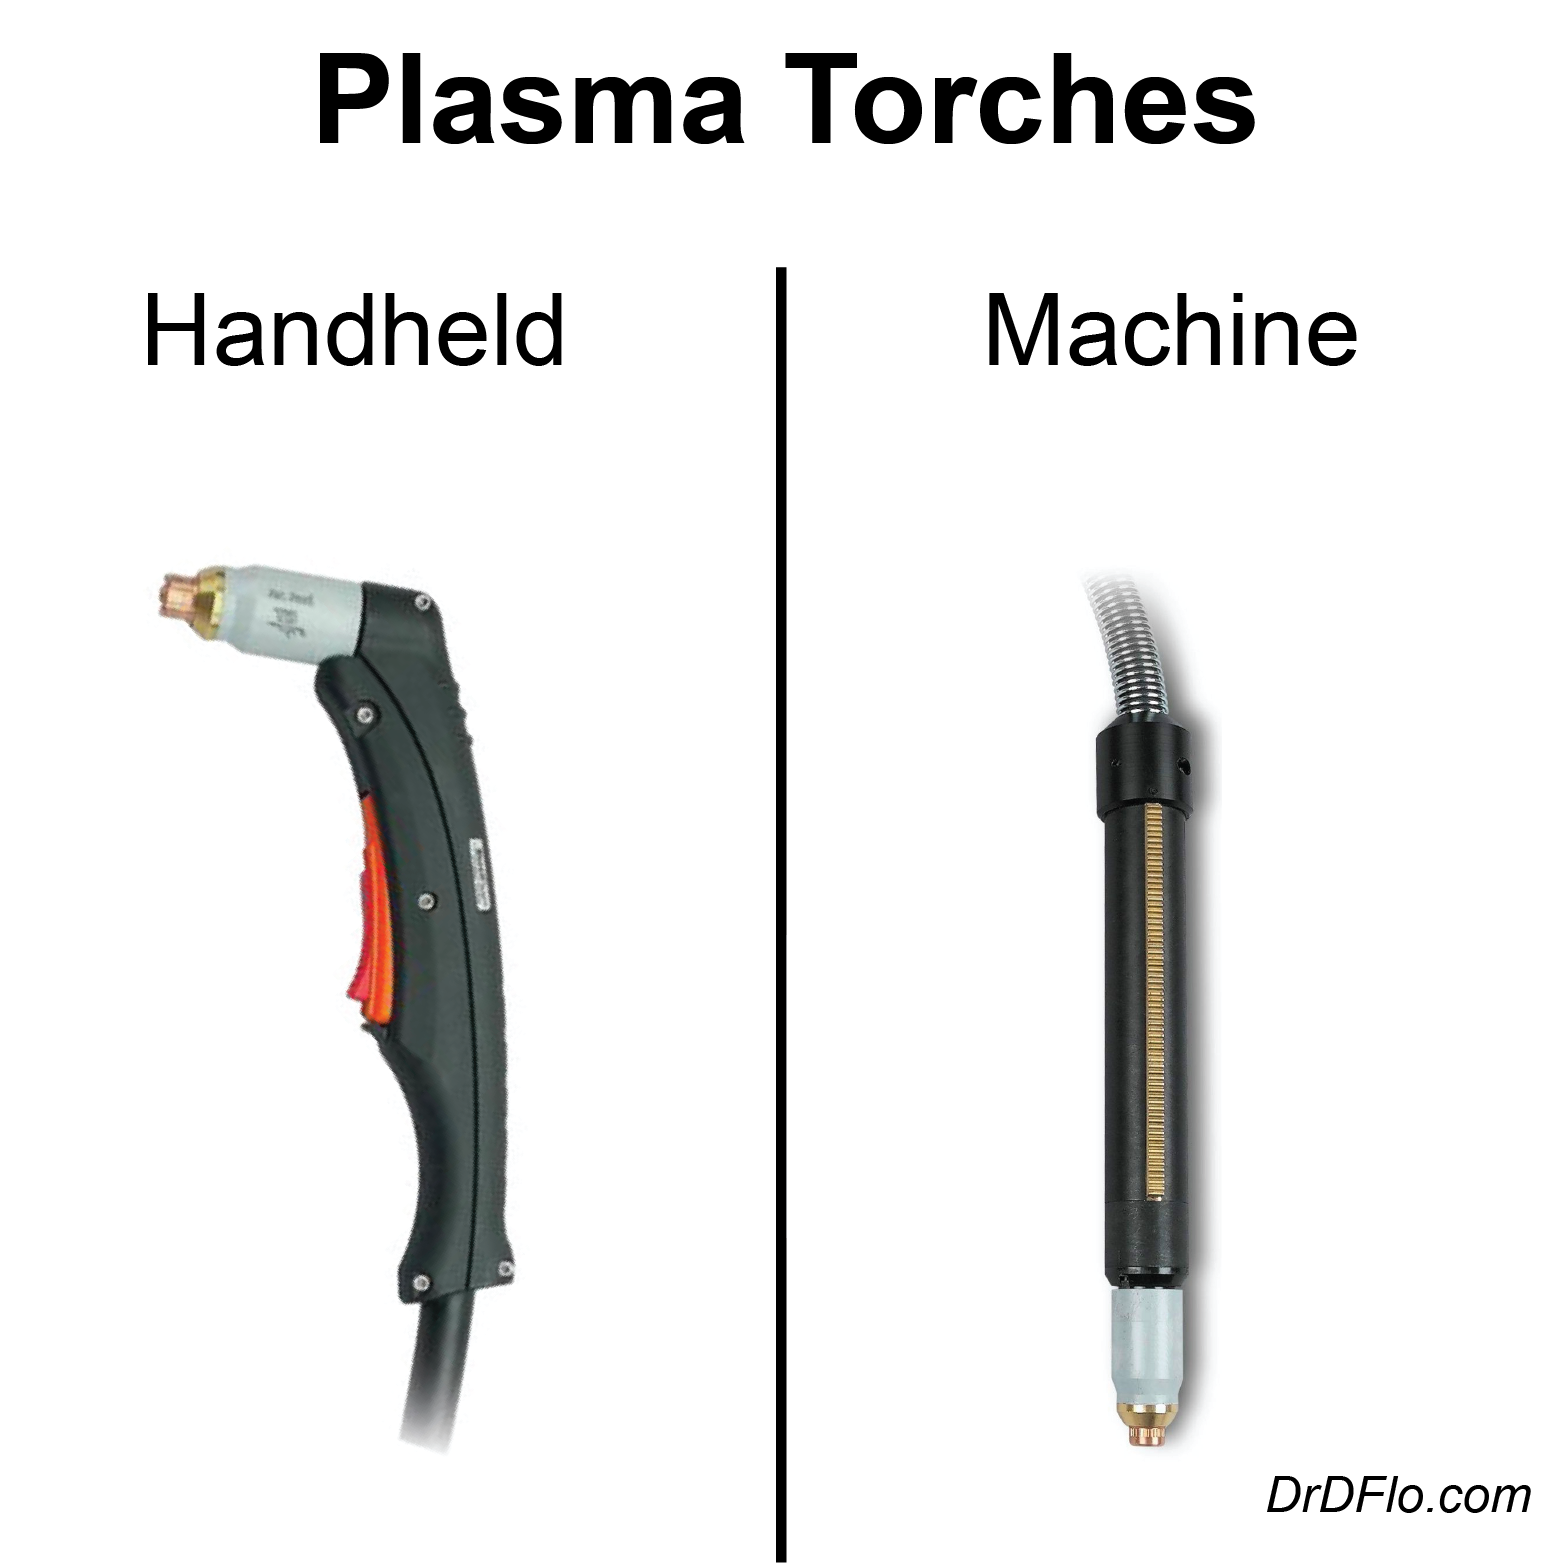 Types of Plasma torches: Handheld vs Machine (Pencil)